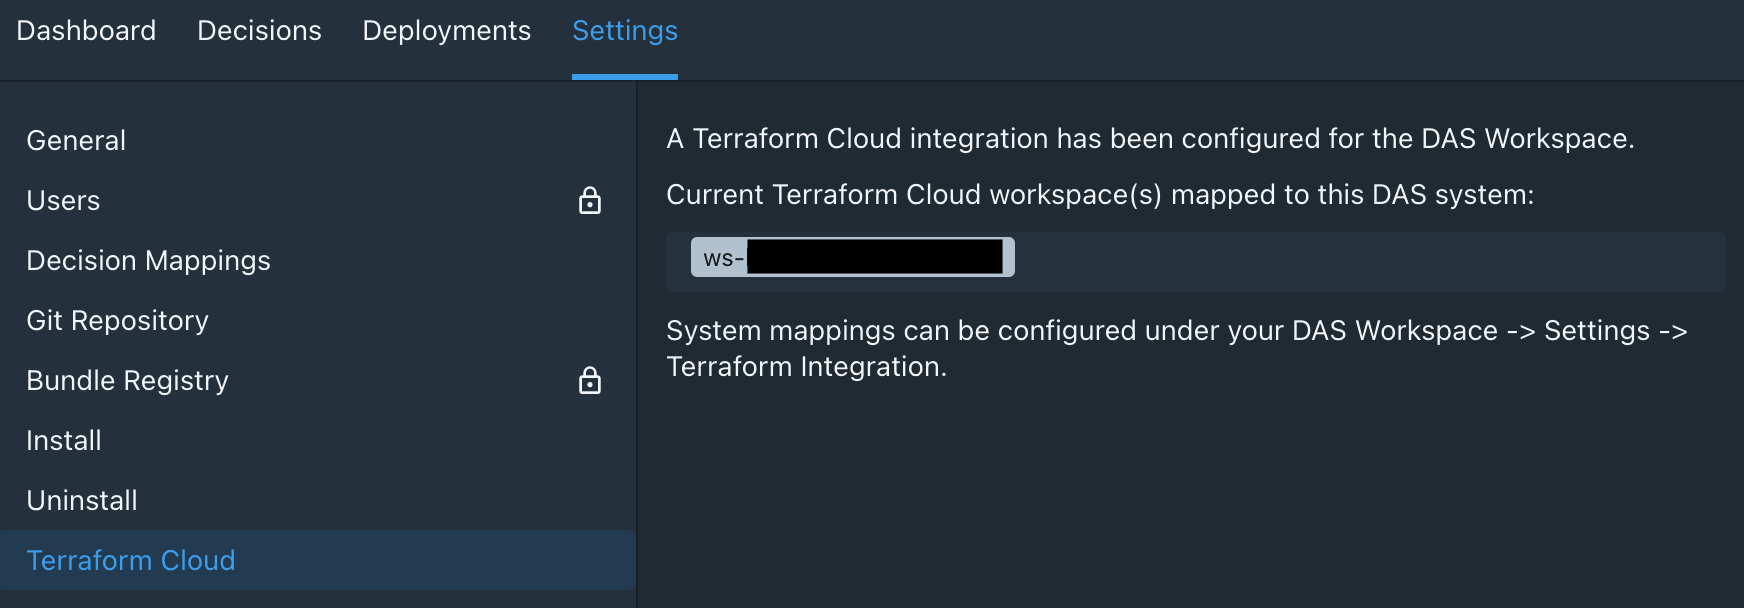 Figure 1 - Terraform Cloud System Mapping